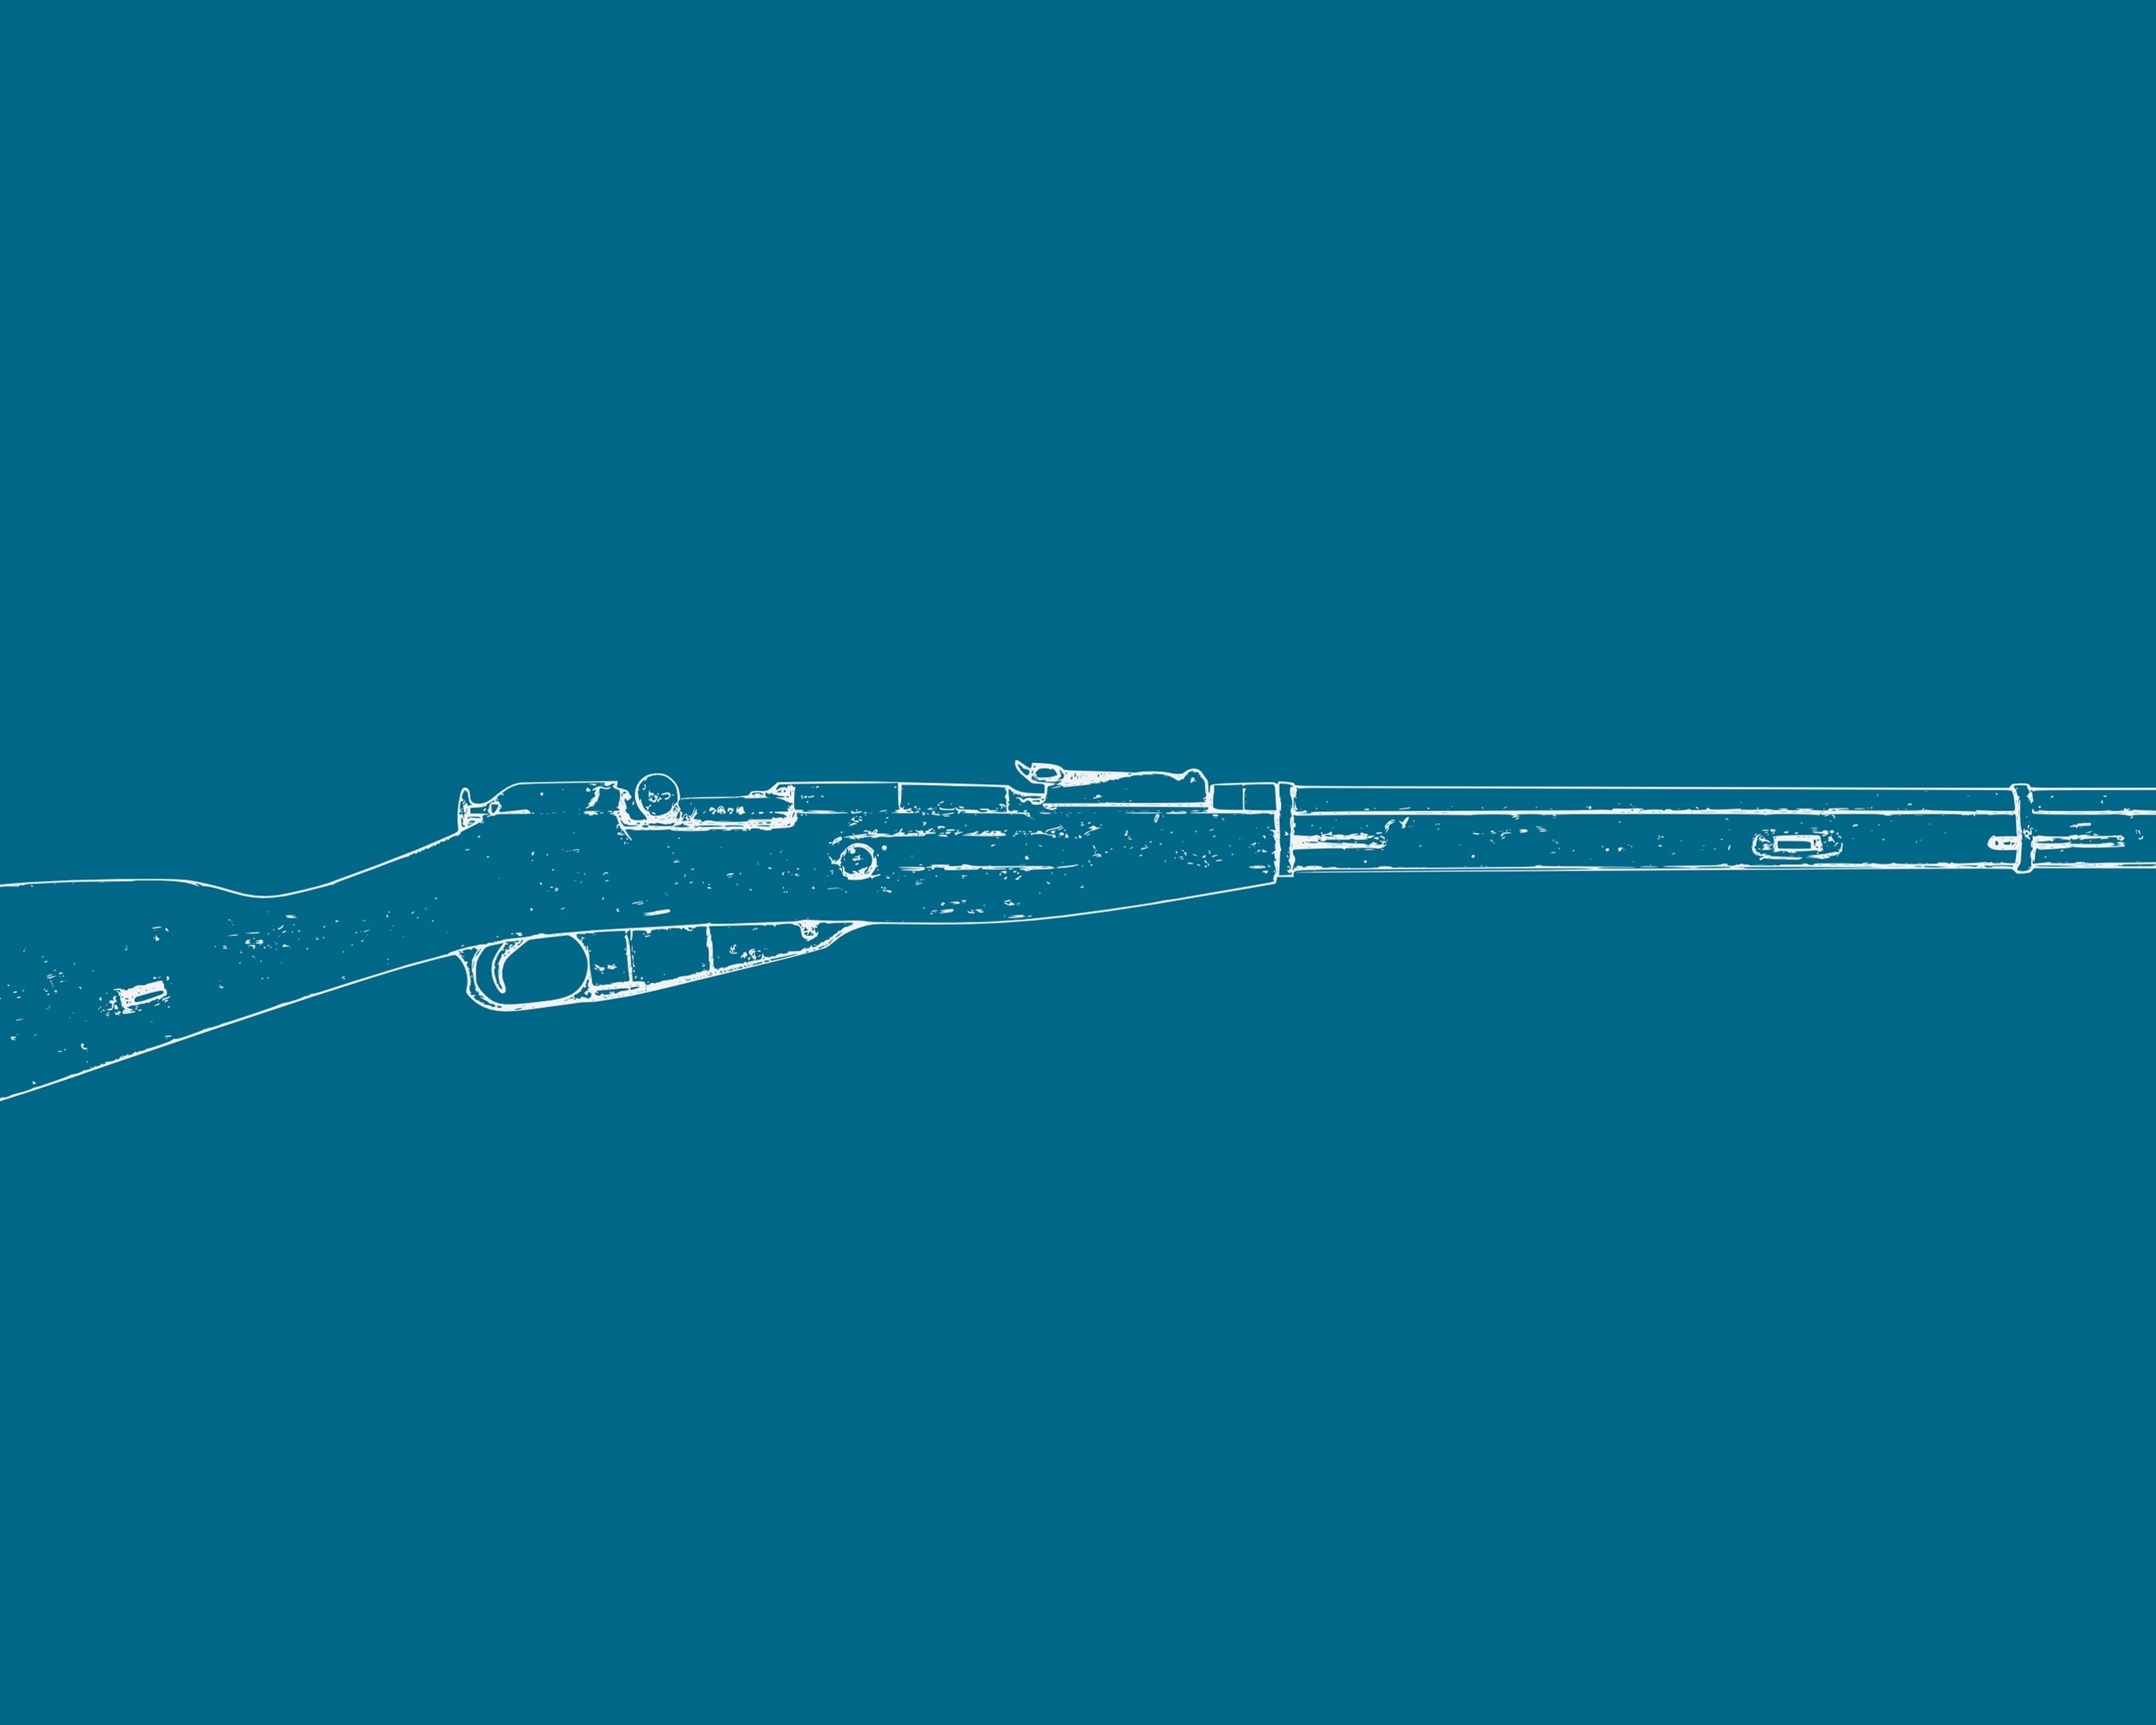 Картинка: Оружие, винтовка, контур, голубой фон